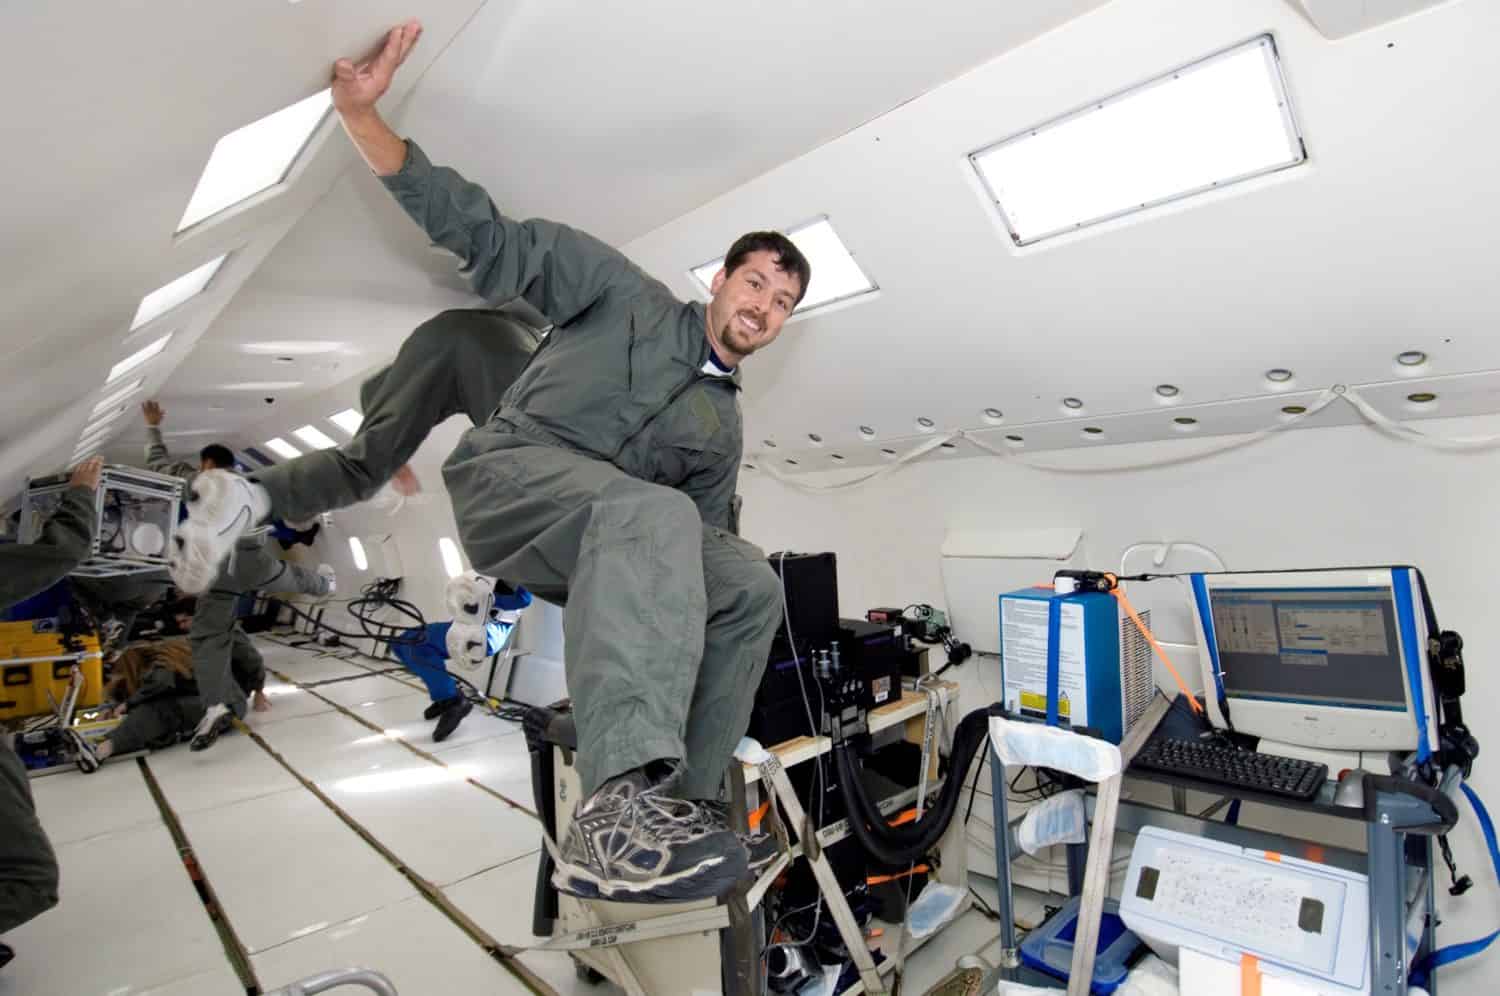 CEO John Jackson prepares to go zero gravity in a space rocket simulator